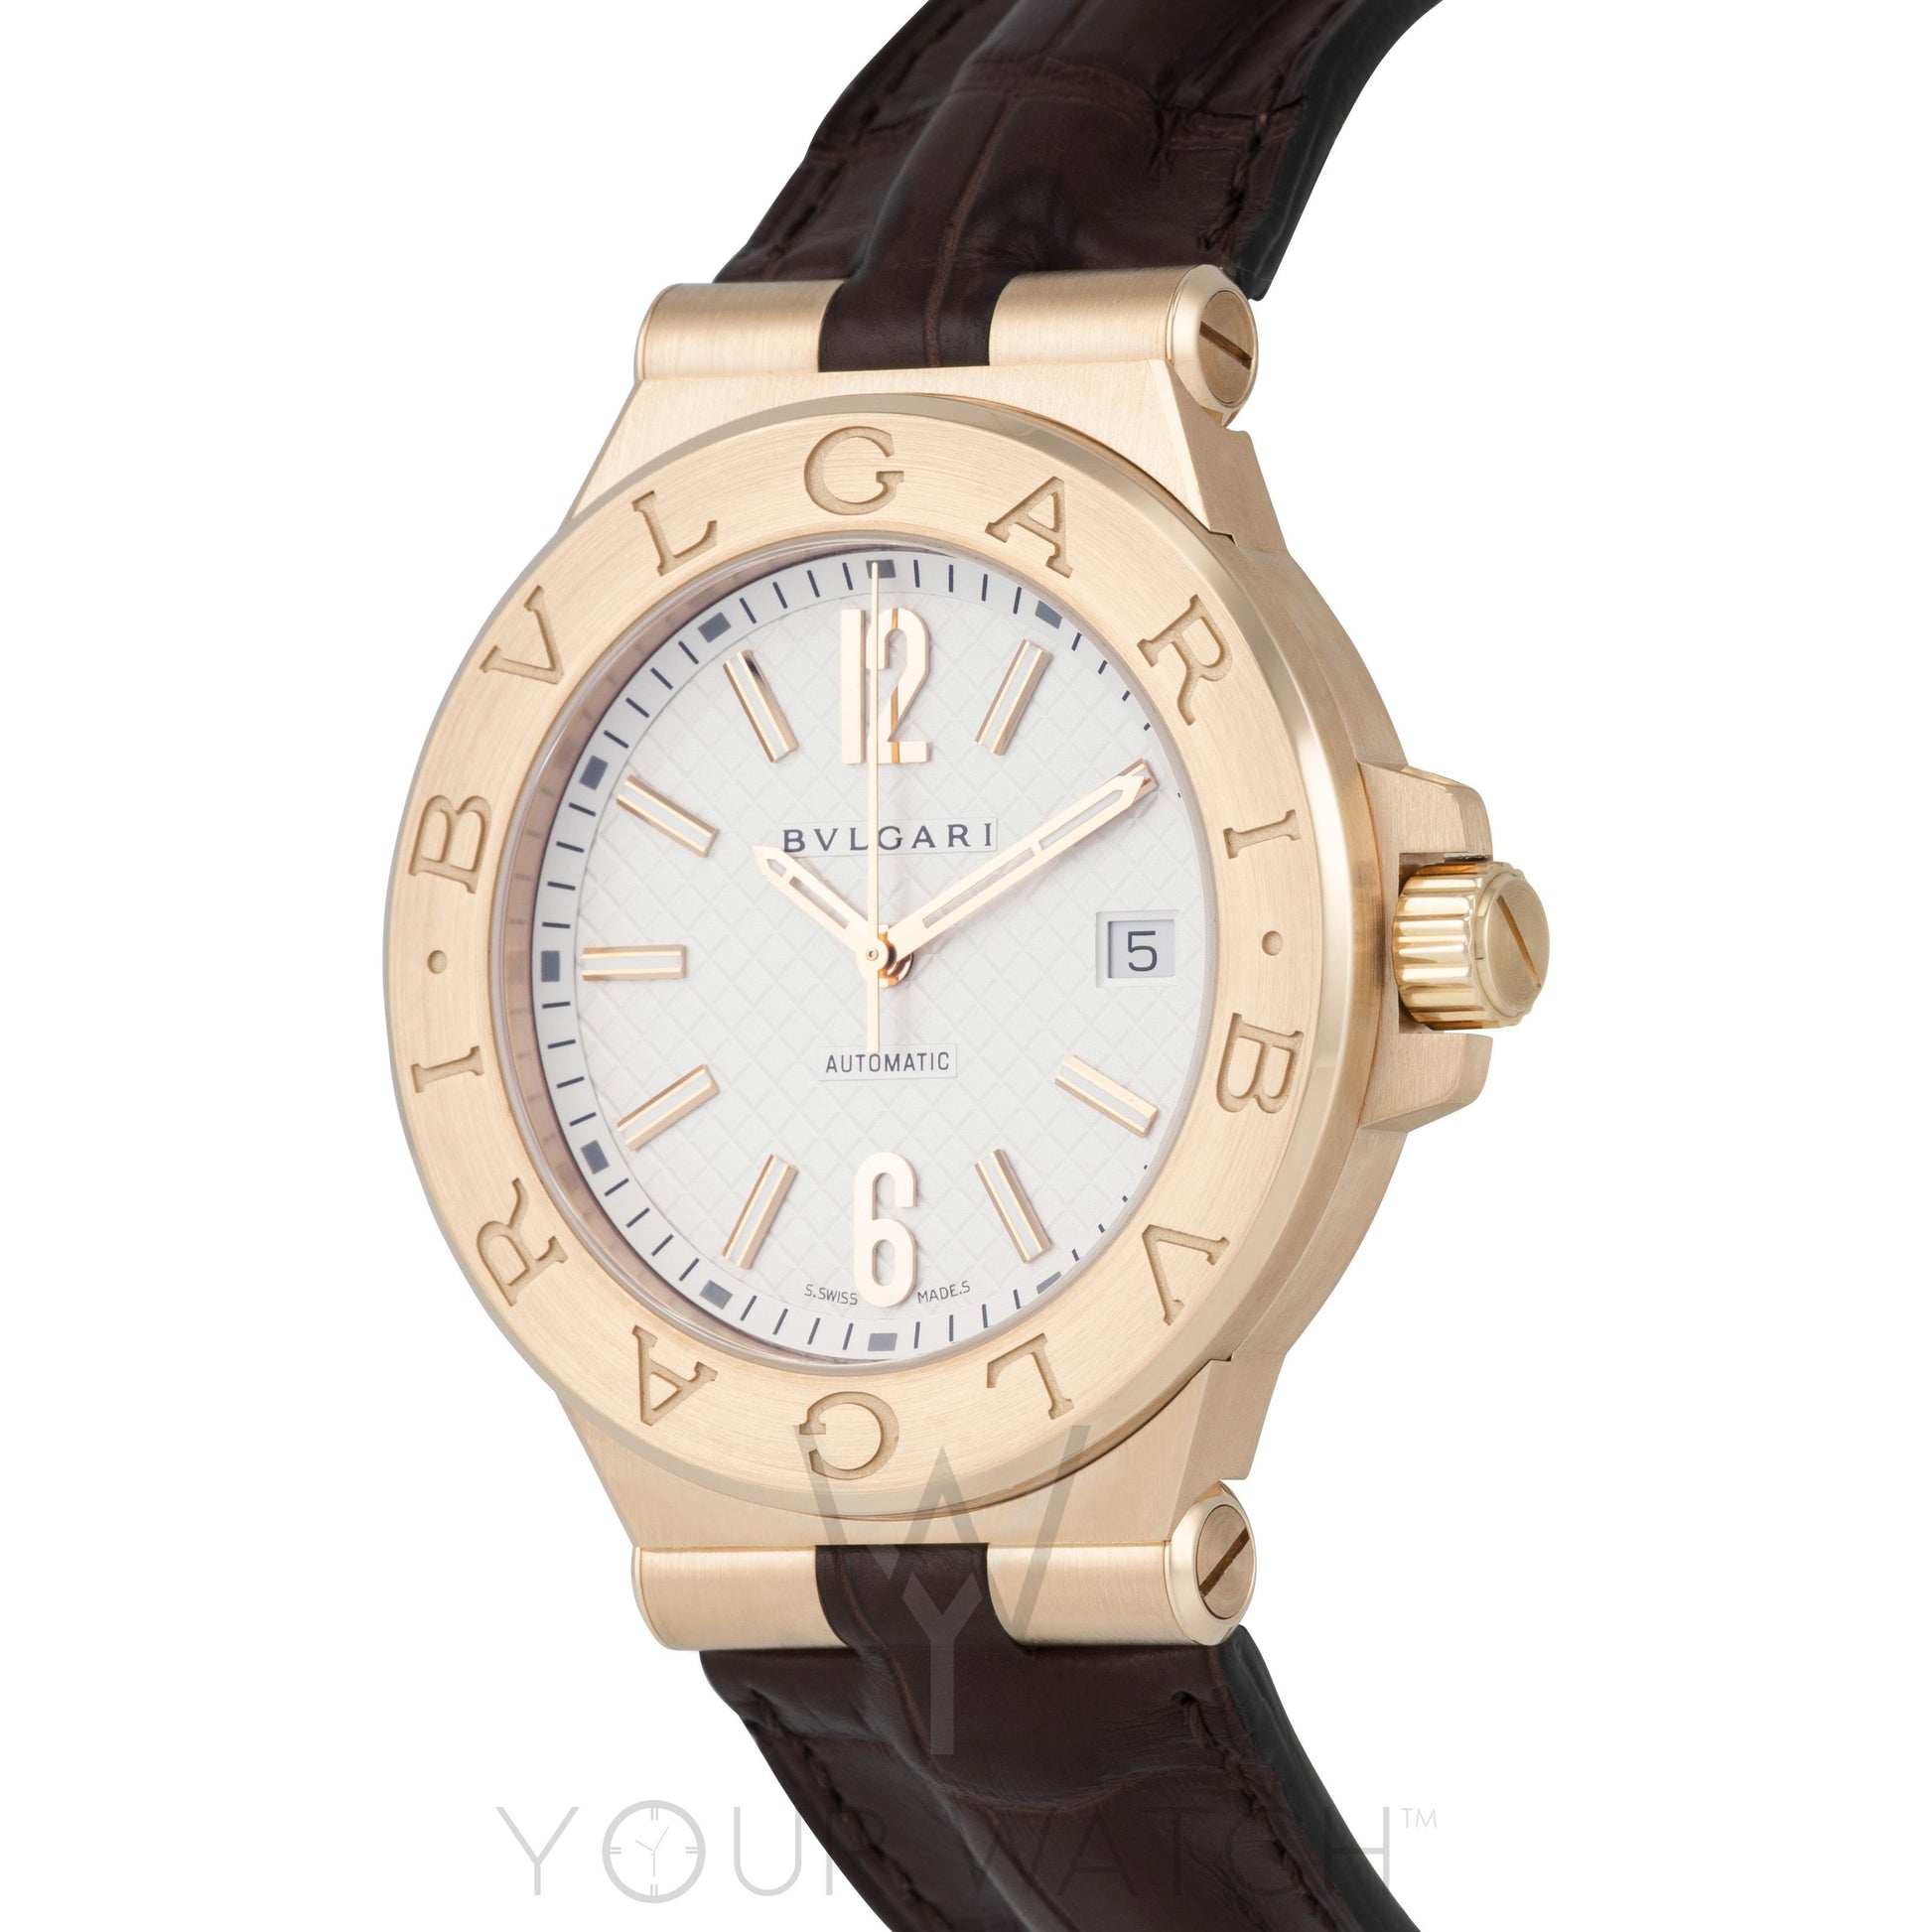 Bvlgari Diagono Professional Automatic Men's Watch 101657